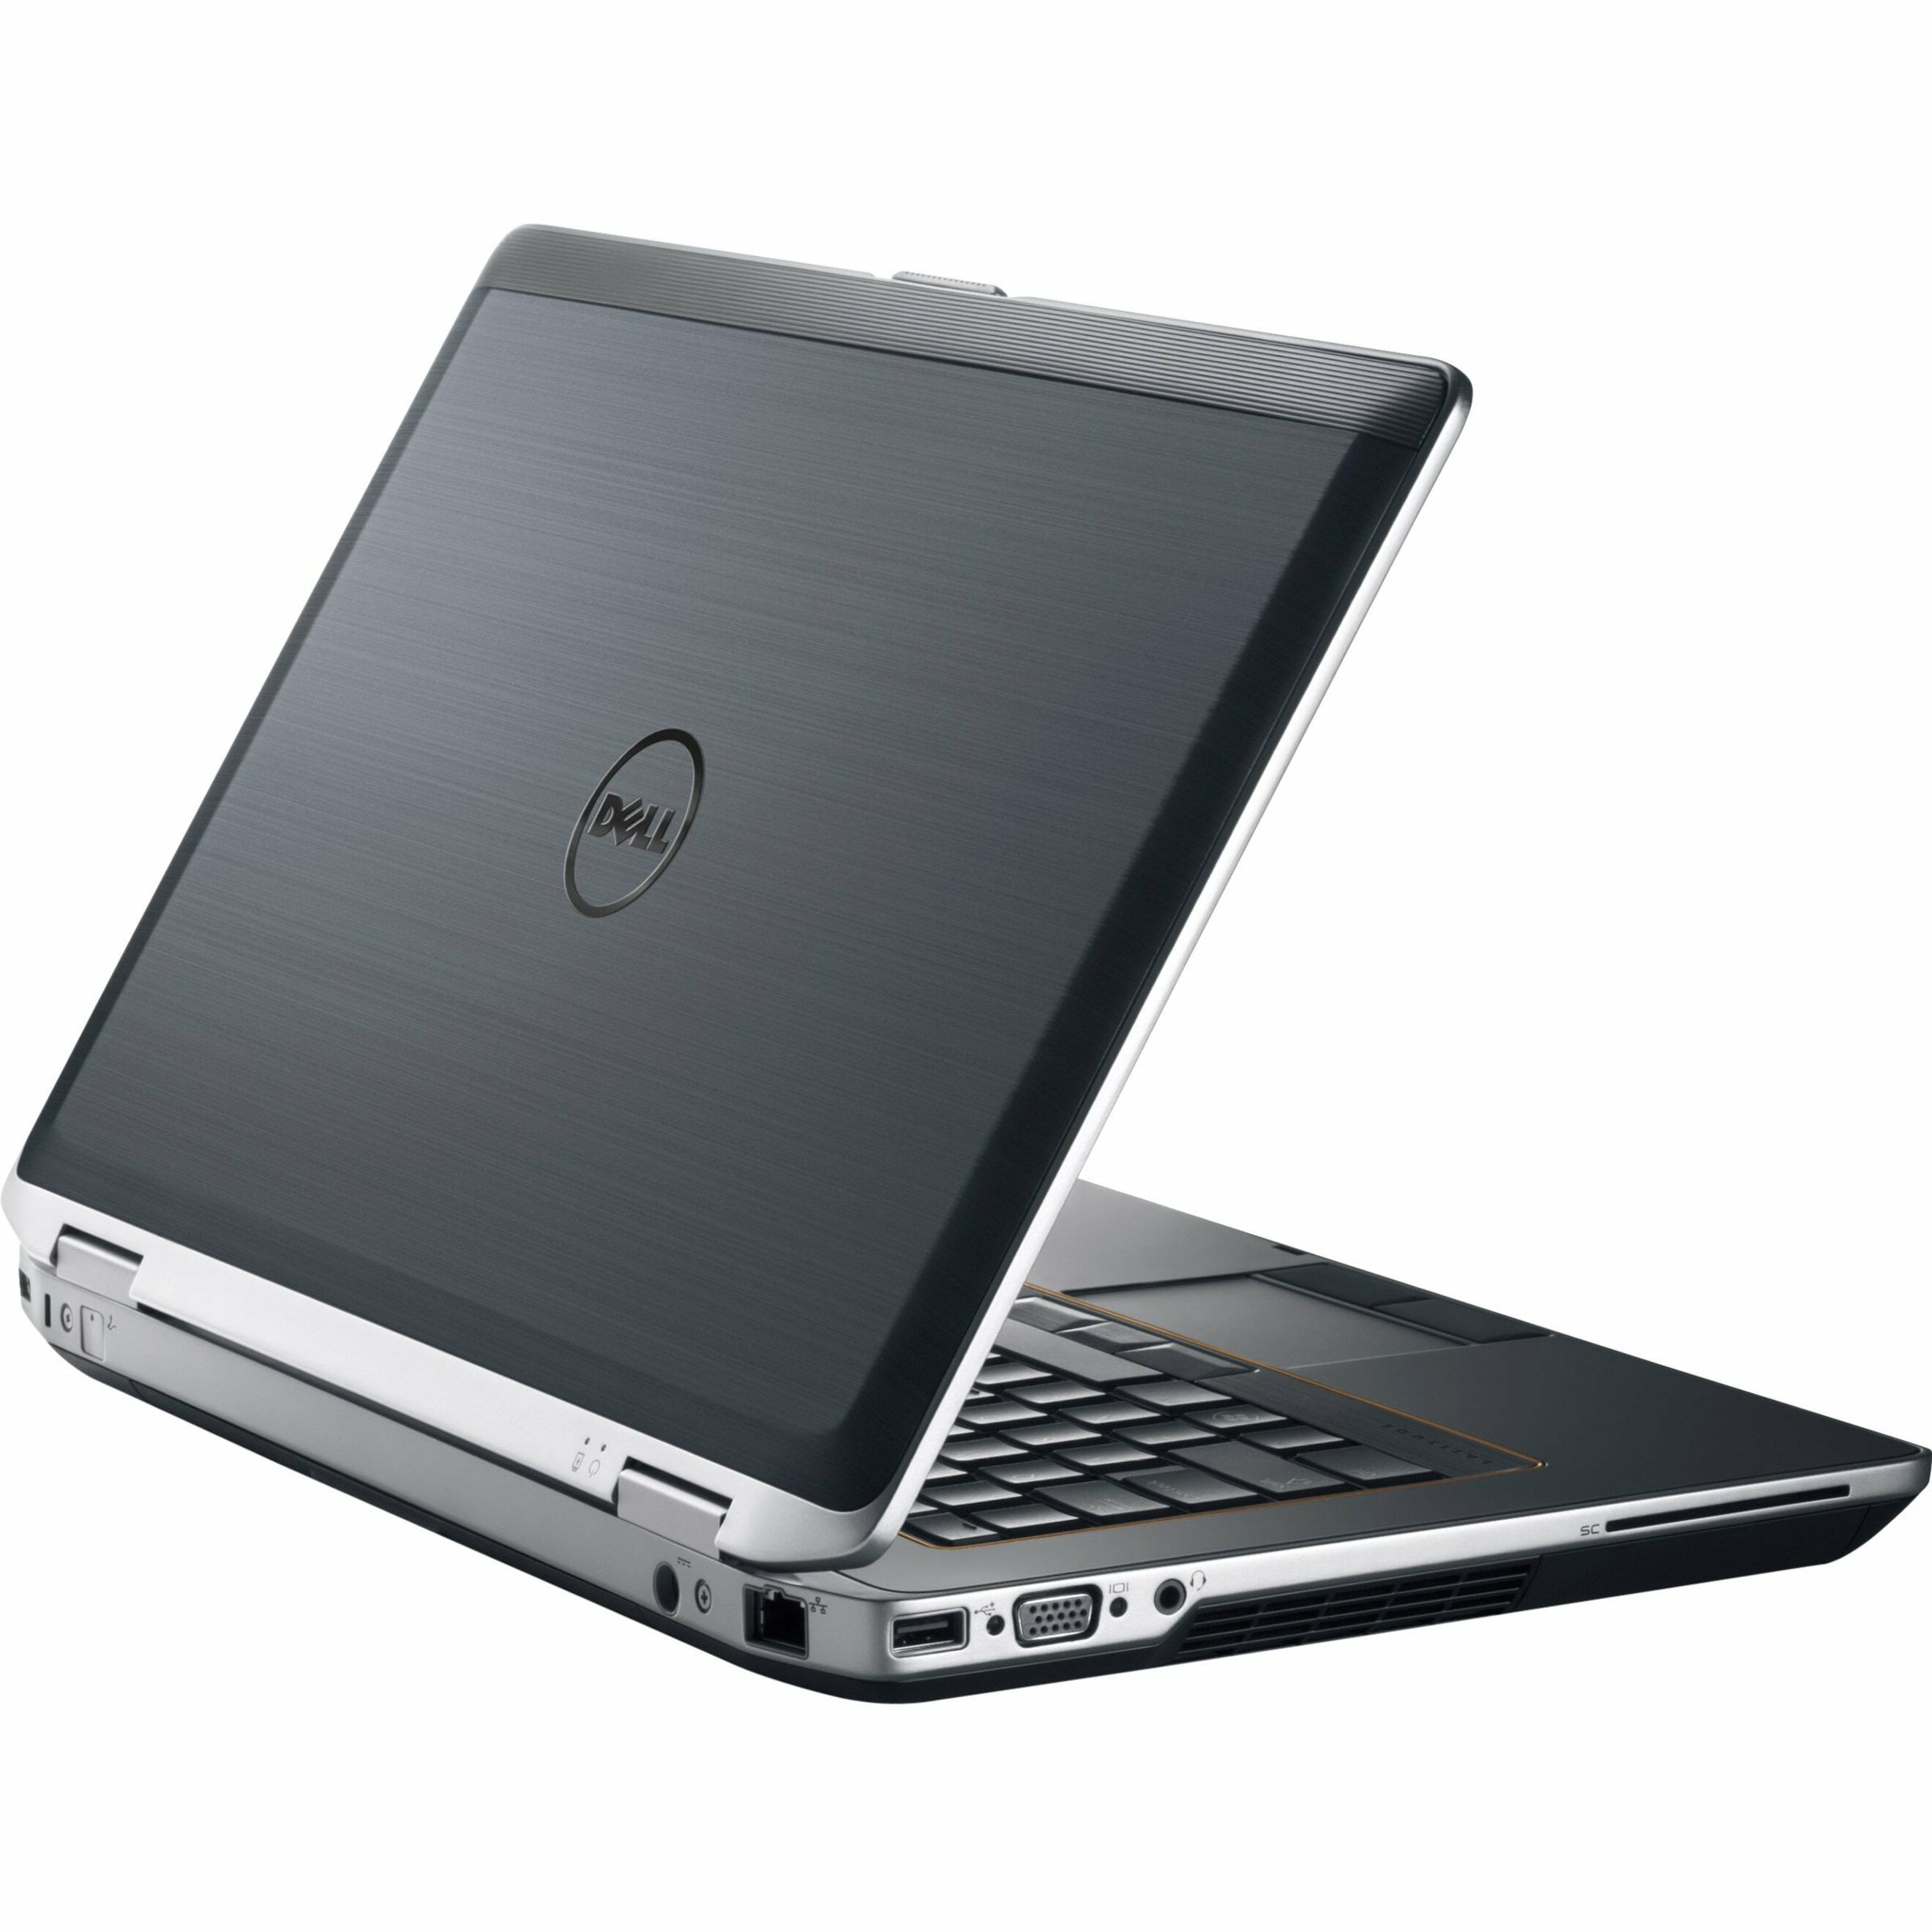 Dell Latitude E6420 Laptop 320GB Hard Drive with Windows 7 Professional 64 Bit 